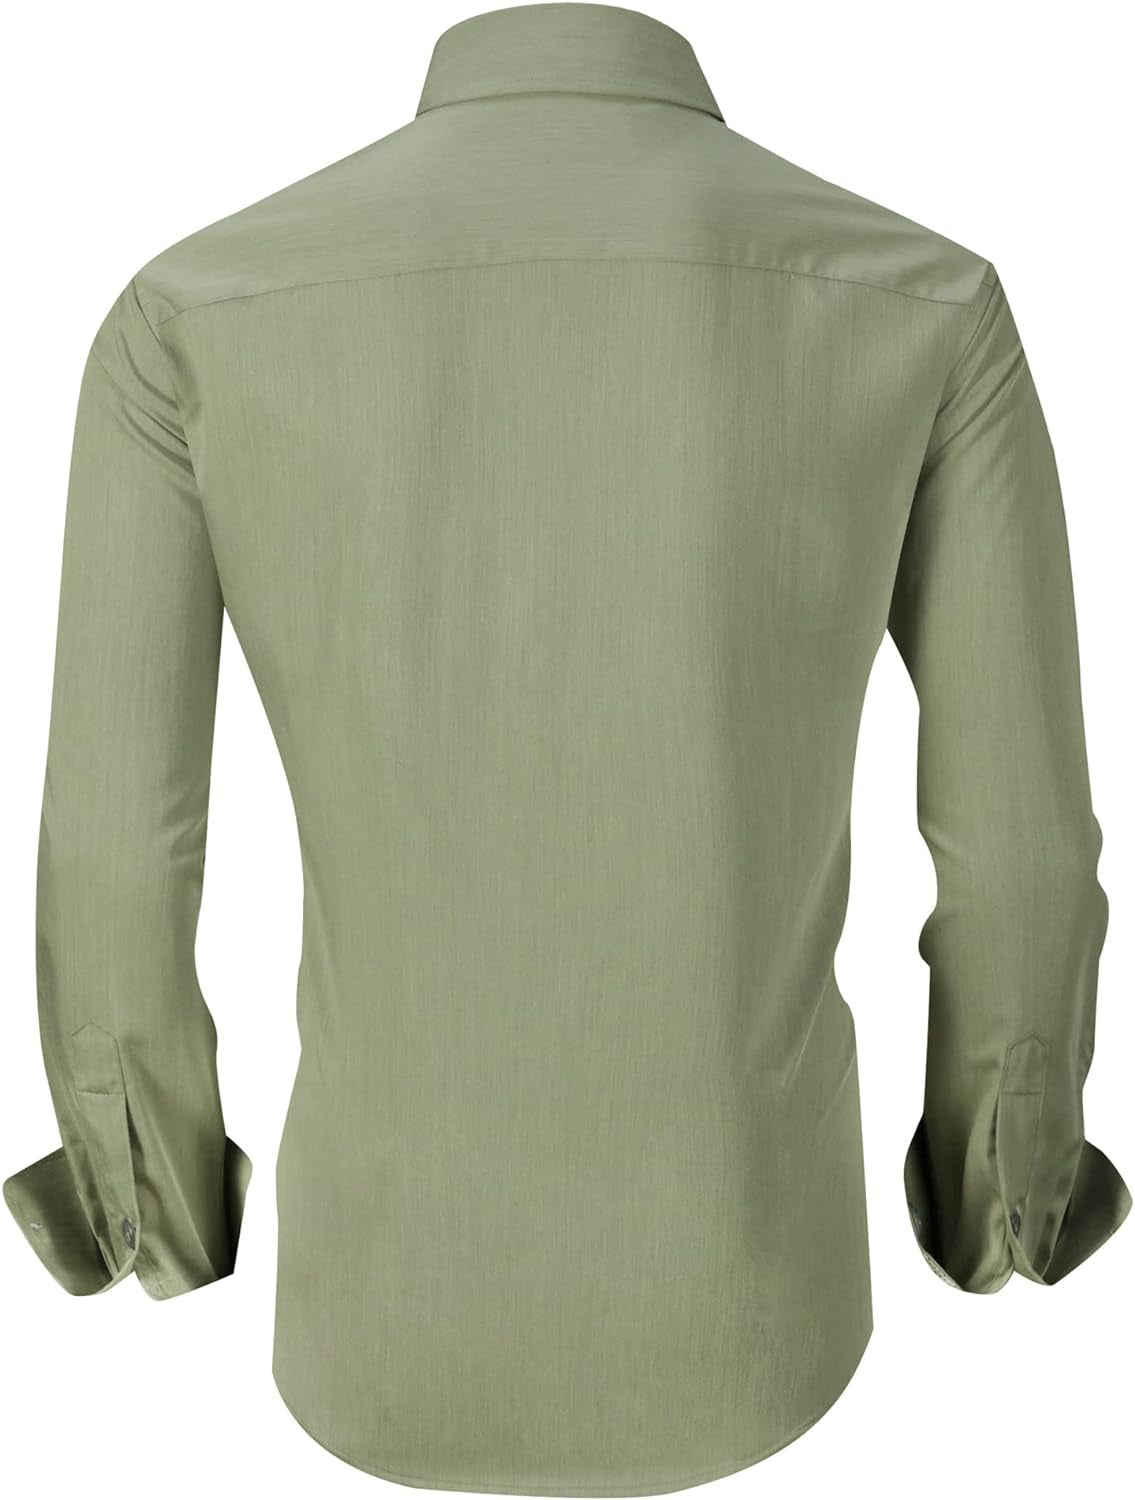 Mens Dress Shirts Wrinkle Free Bamboo Fiber Long Sleeve Casual Button down Shirt